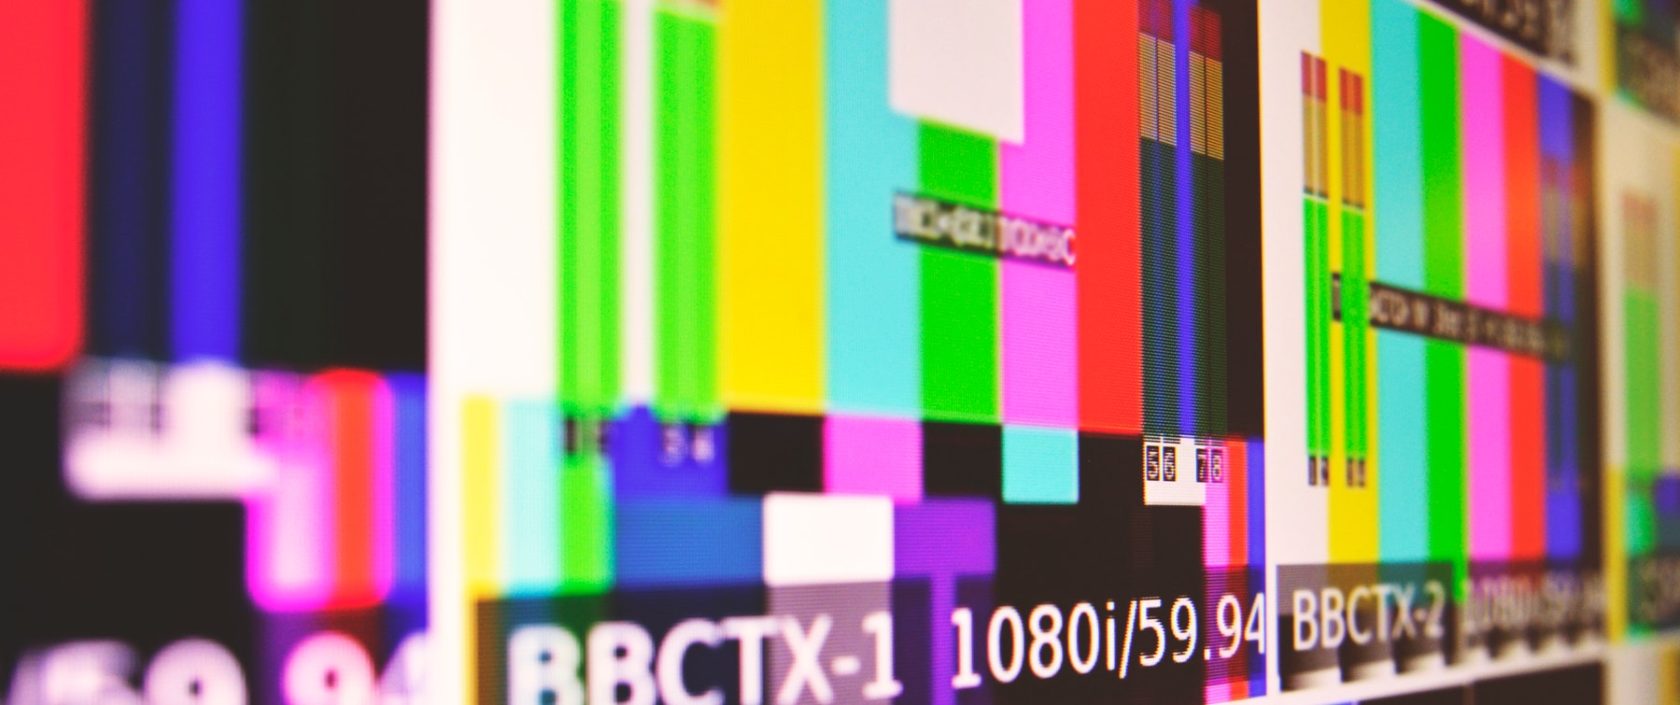 tv colorful standby error screen